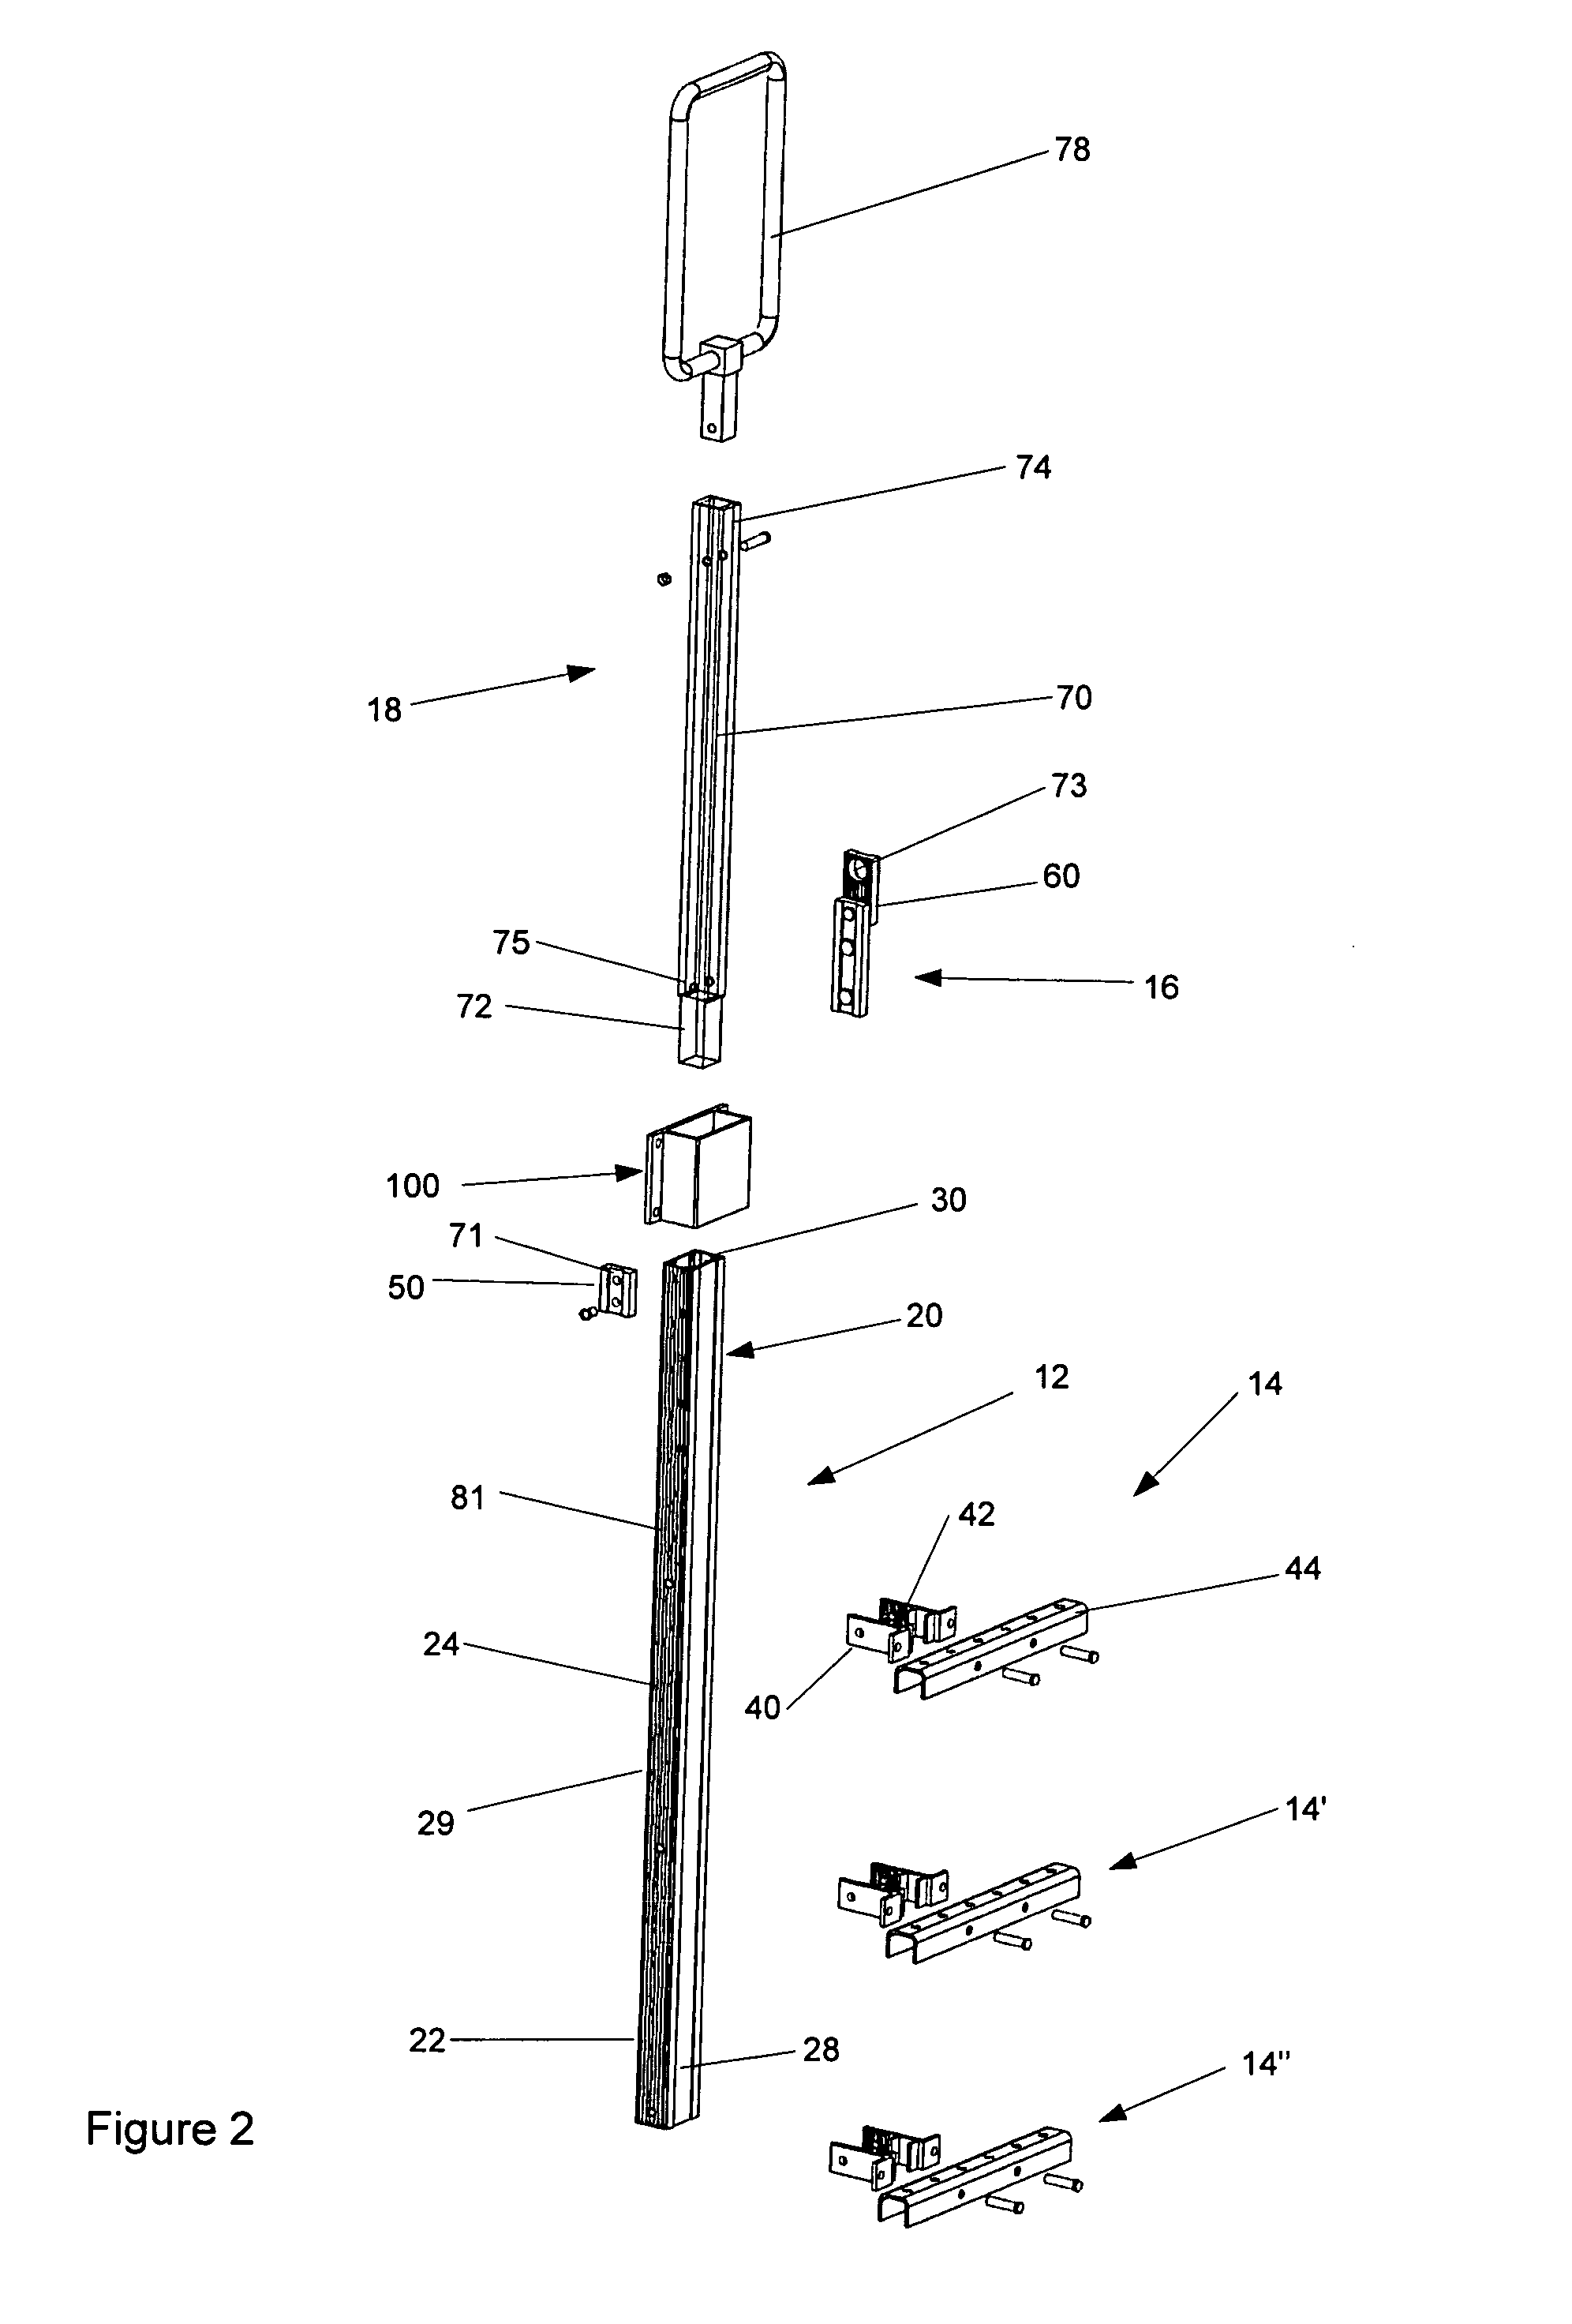 Step ladder apparatus